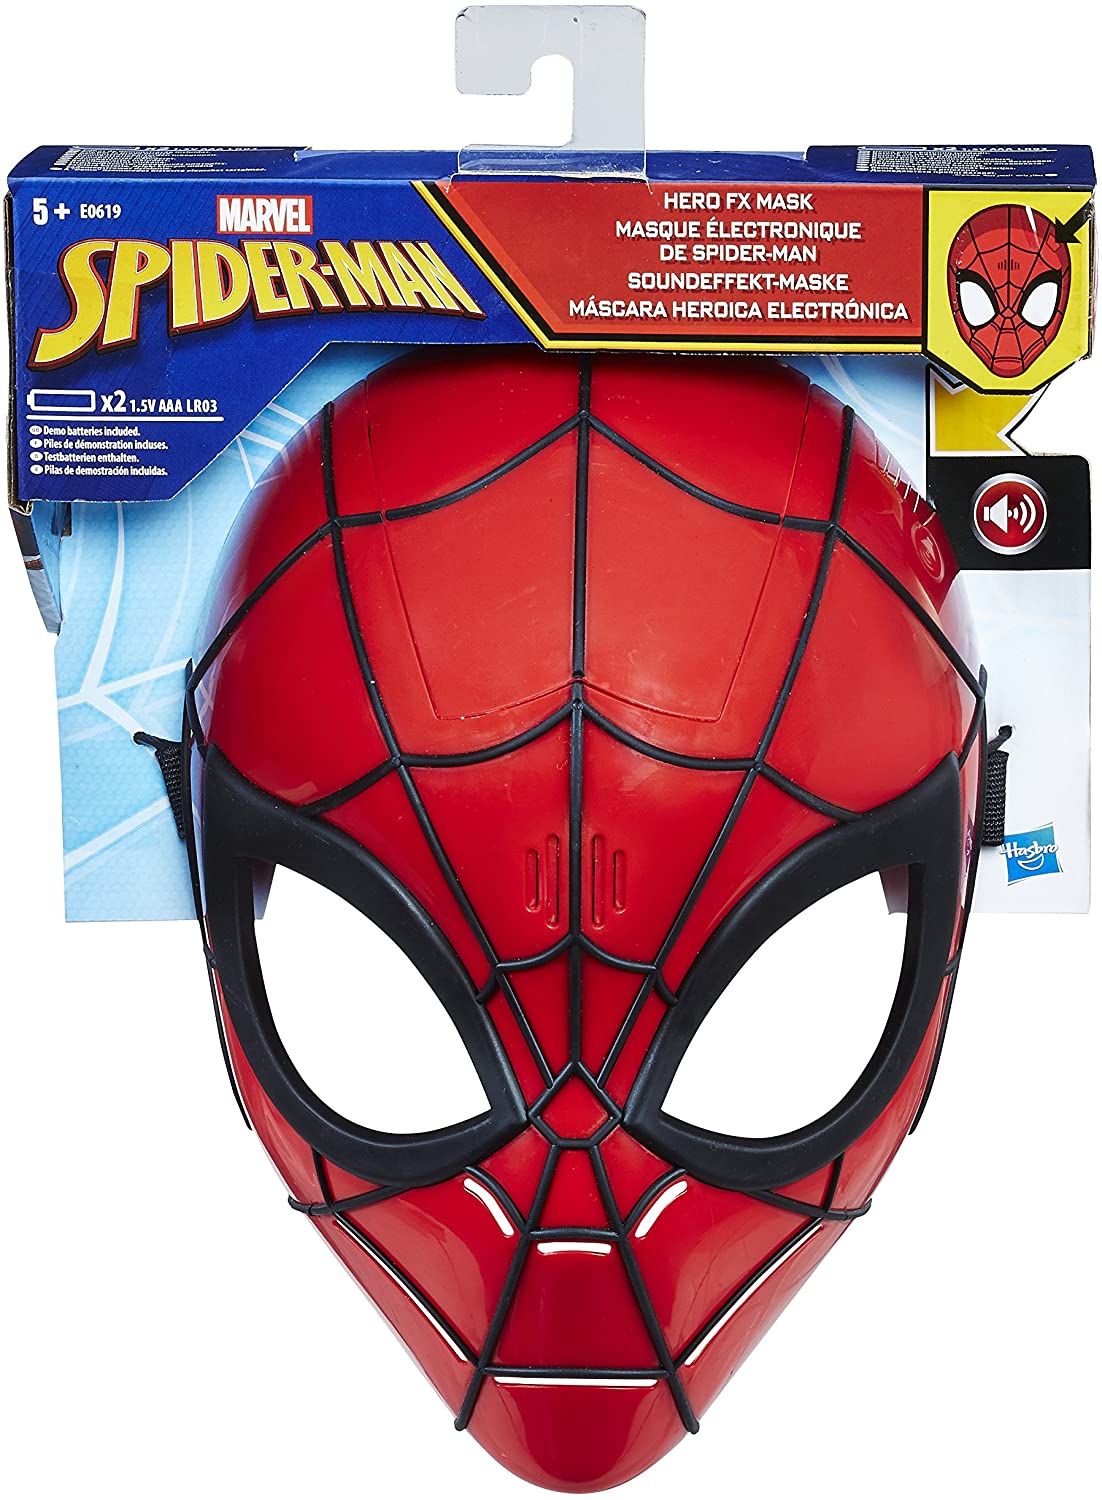 Masque Electronique spiderman